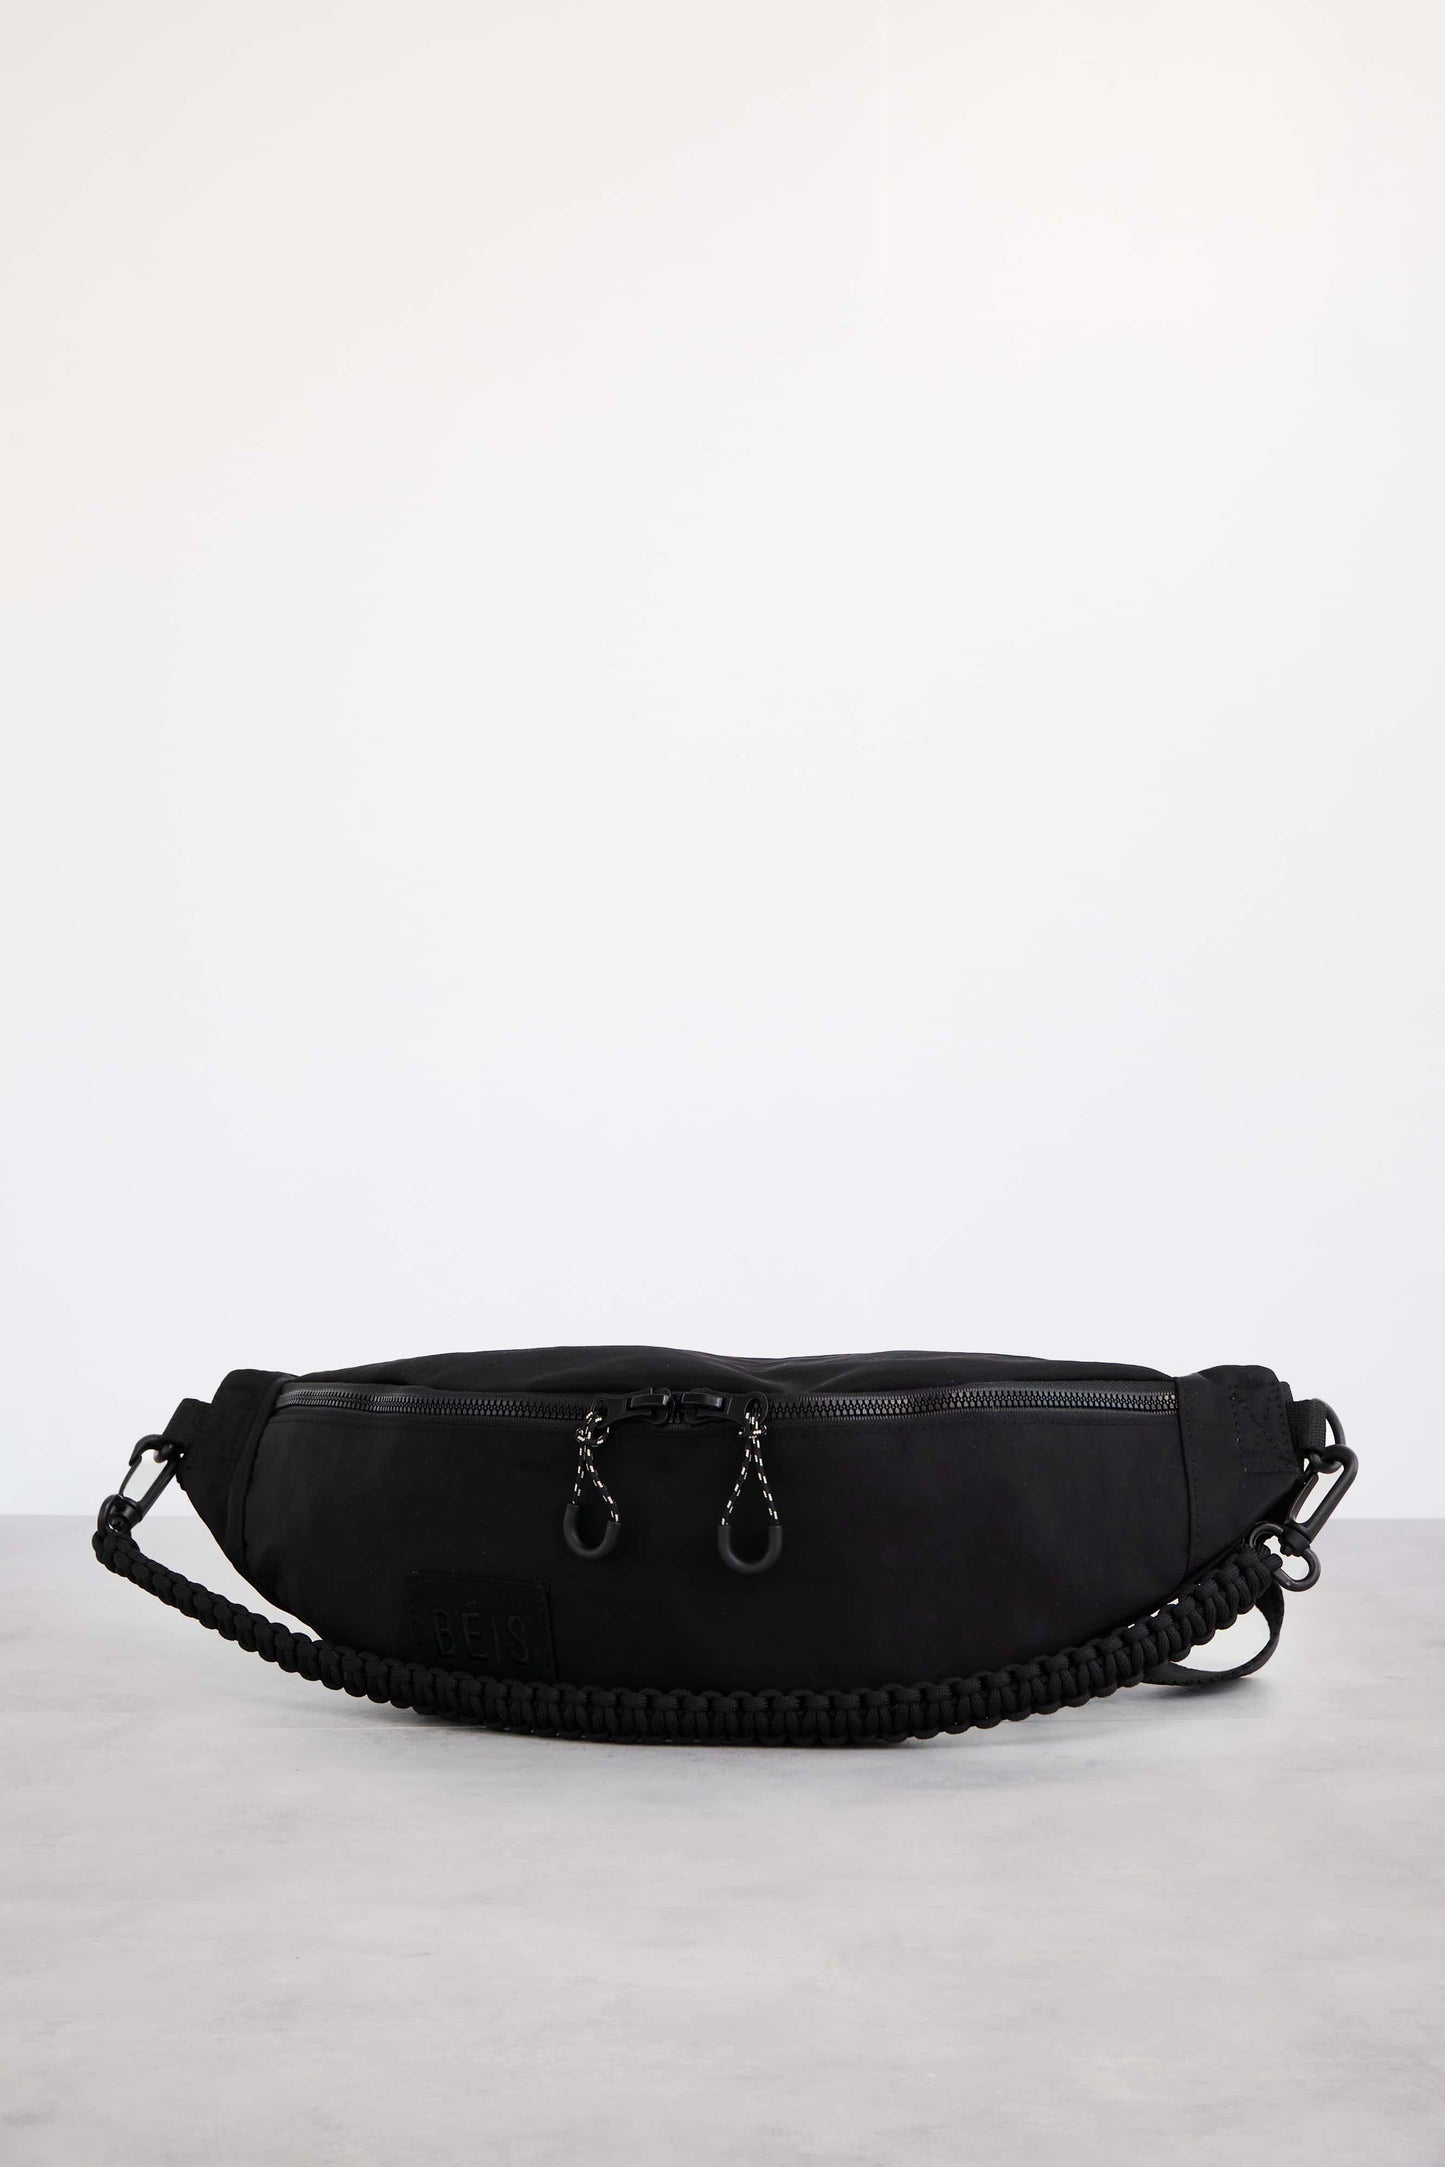 BÉIS ' The Sport Pack' in Black - Black Crossbody Fanny Pack & Sling Bag